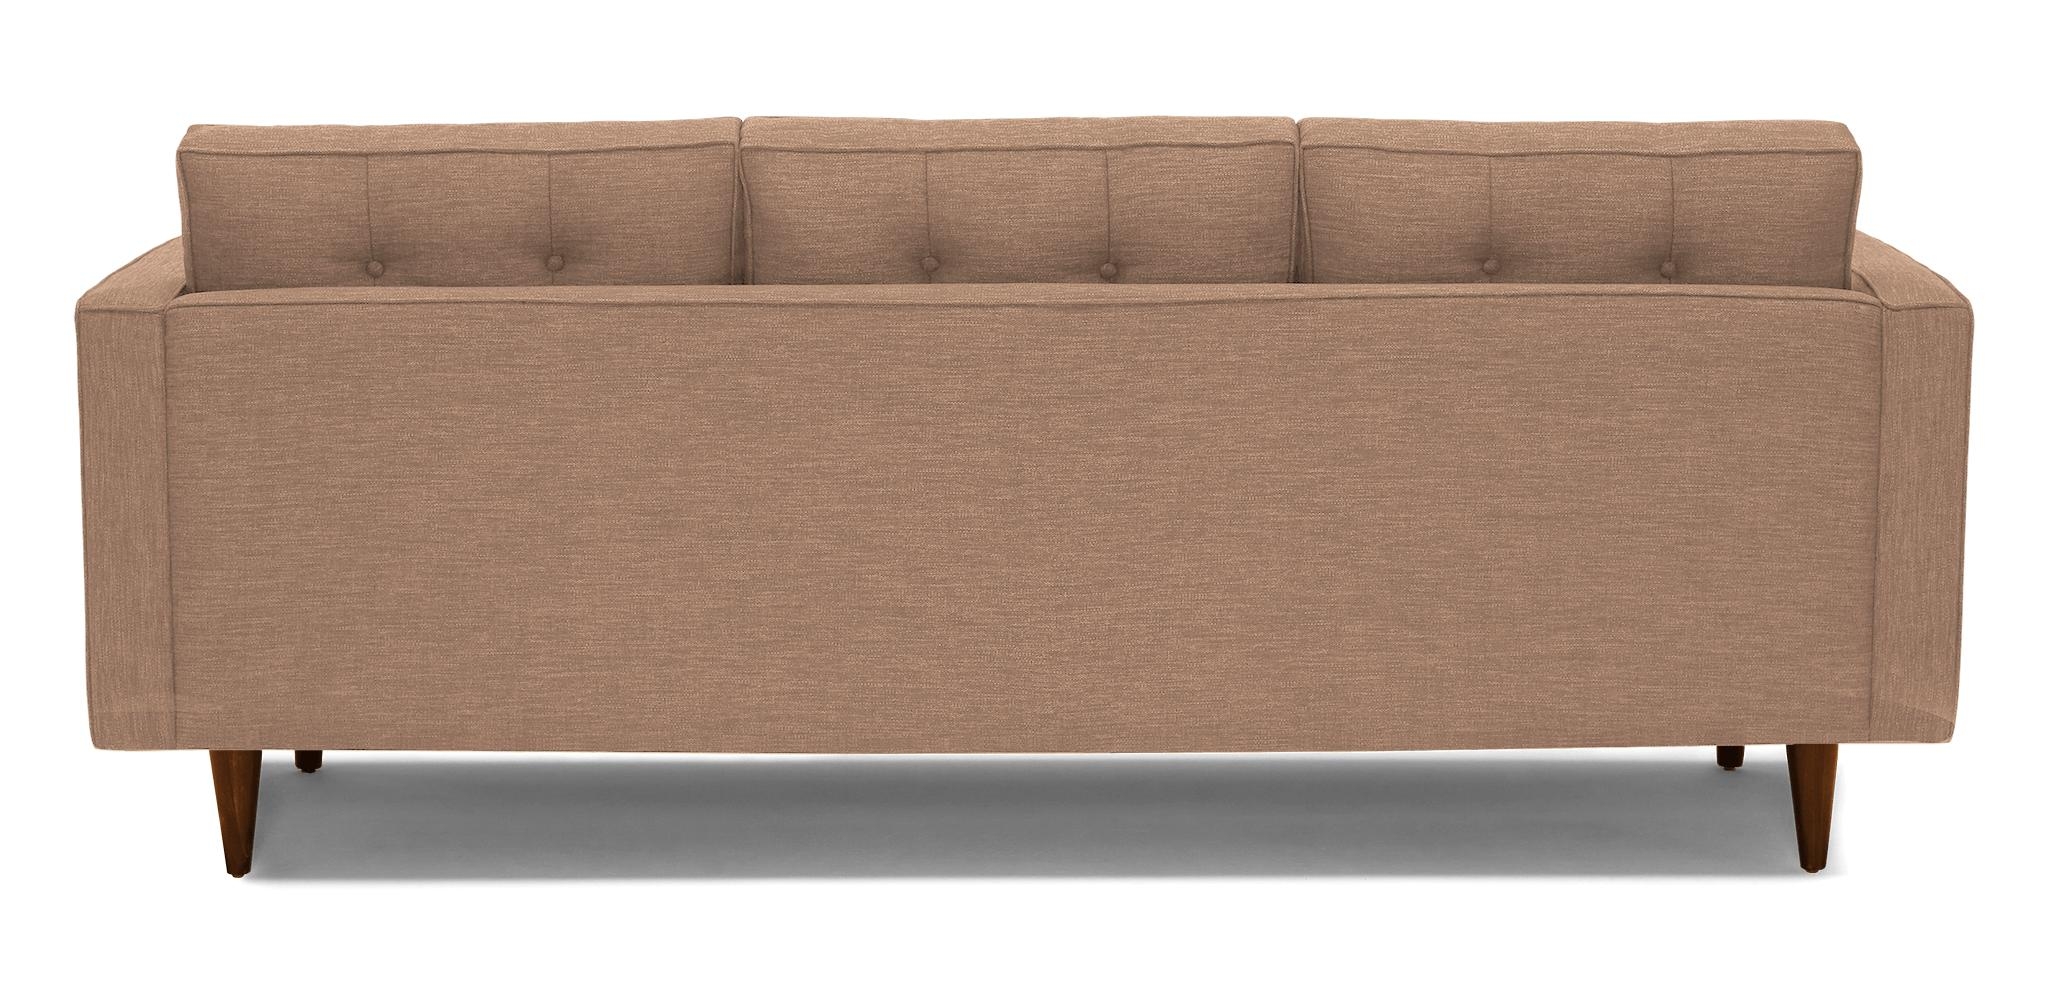 Pink Braxton Mid Century Modern Sofa - Royale Blush - Mocha - Image 4